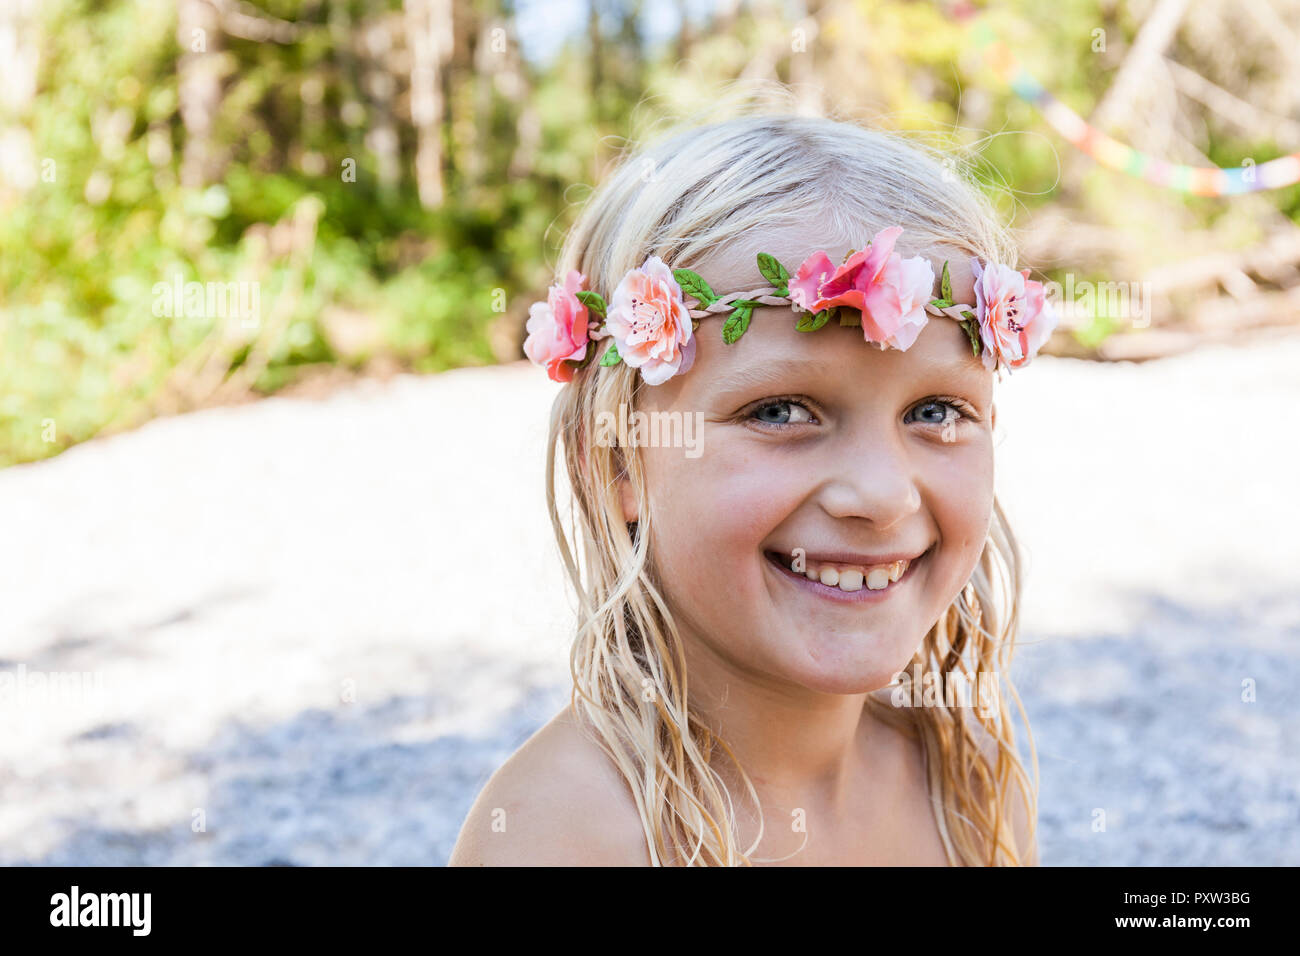 Retrato de niña alegre portando corona de flores al aire libre en verano Foto de stock